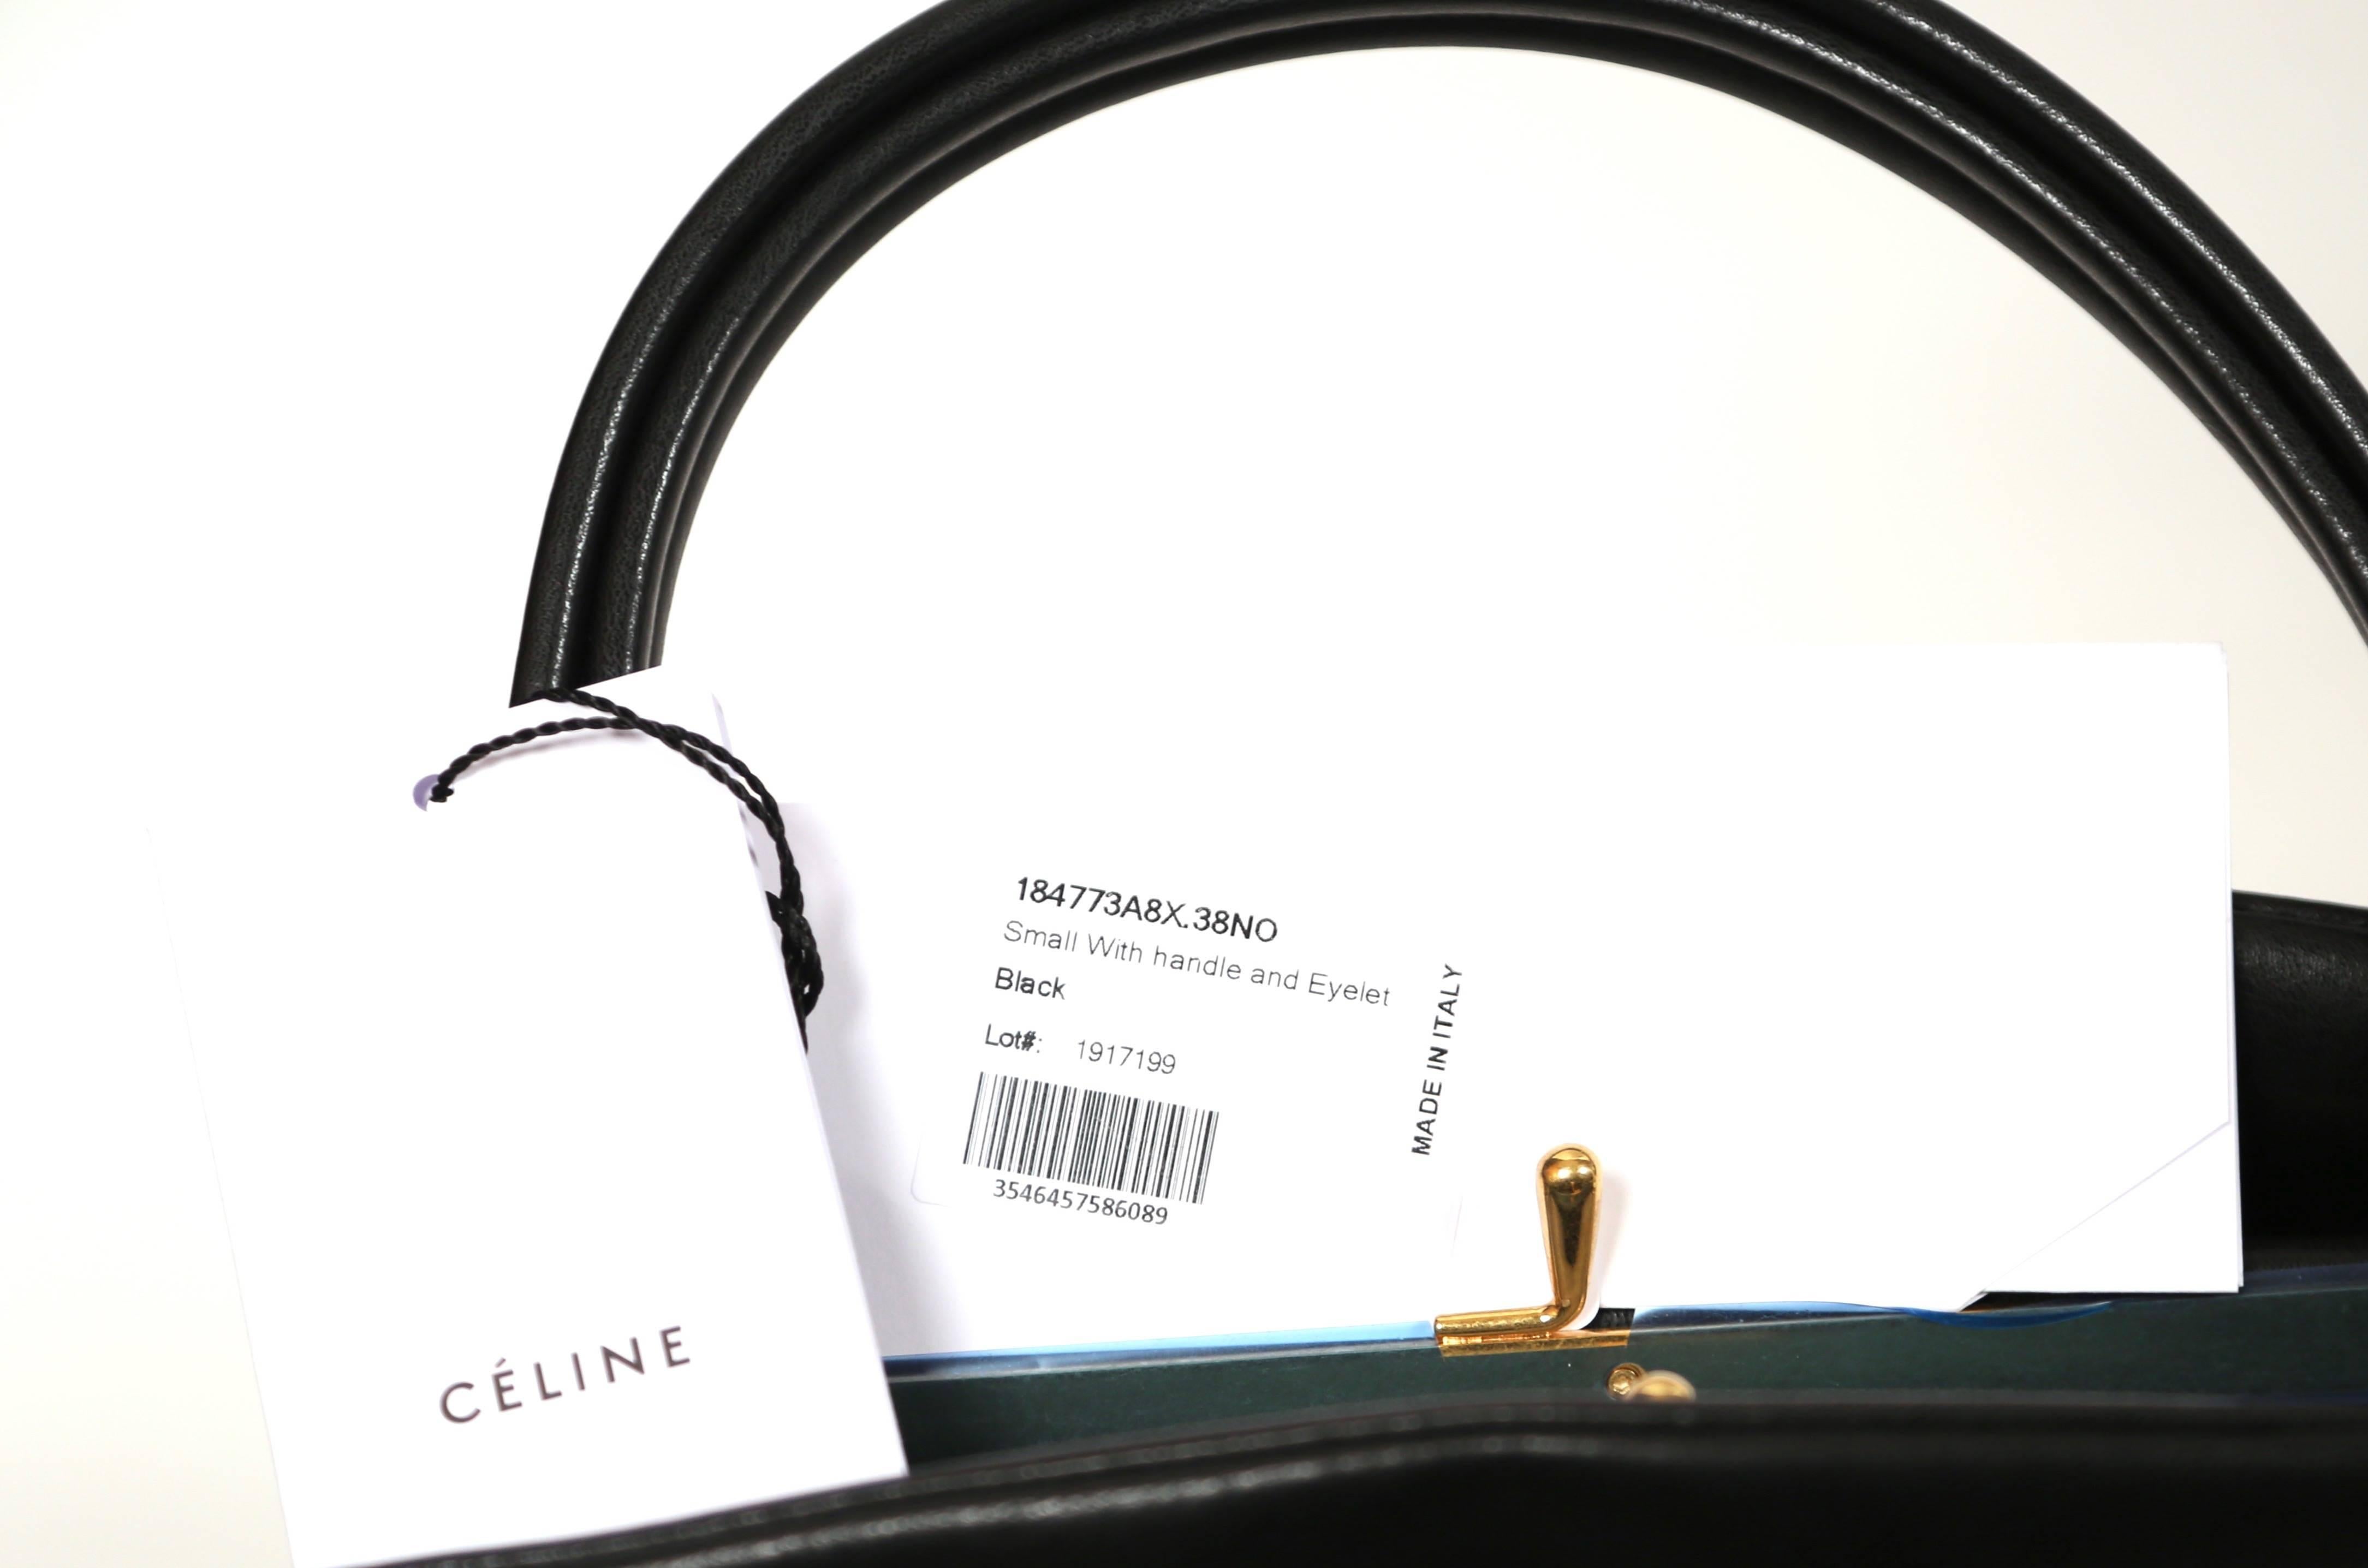 Black Celine By Phoebe Philo black leather runway bag with eyelets, 2018